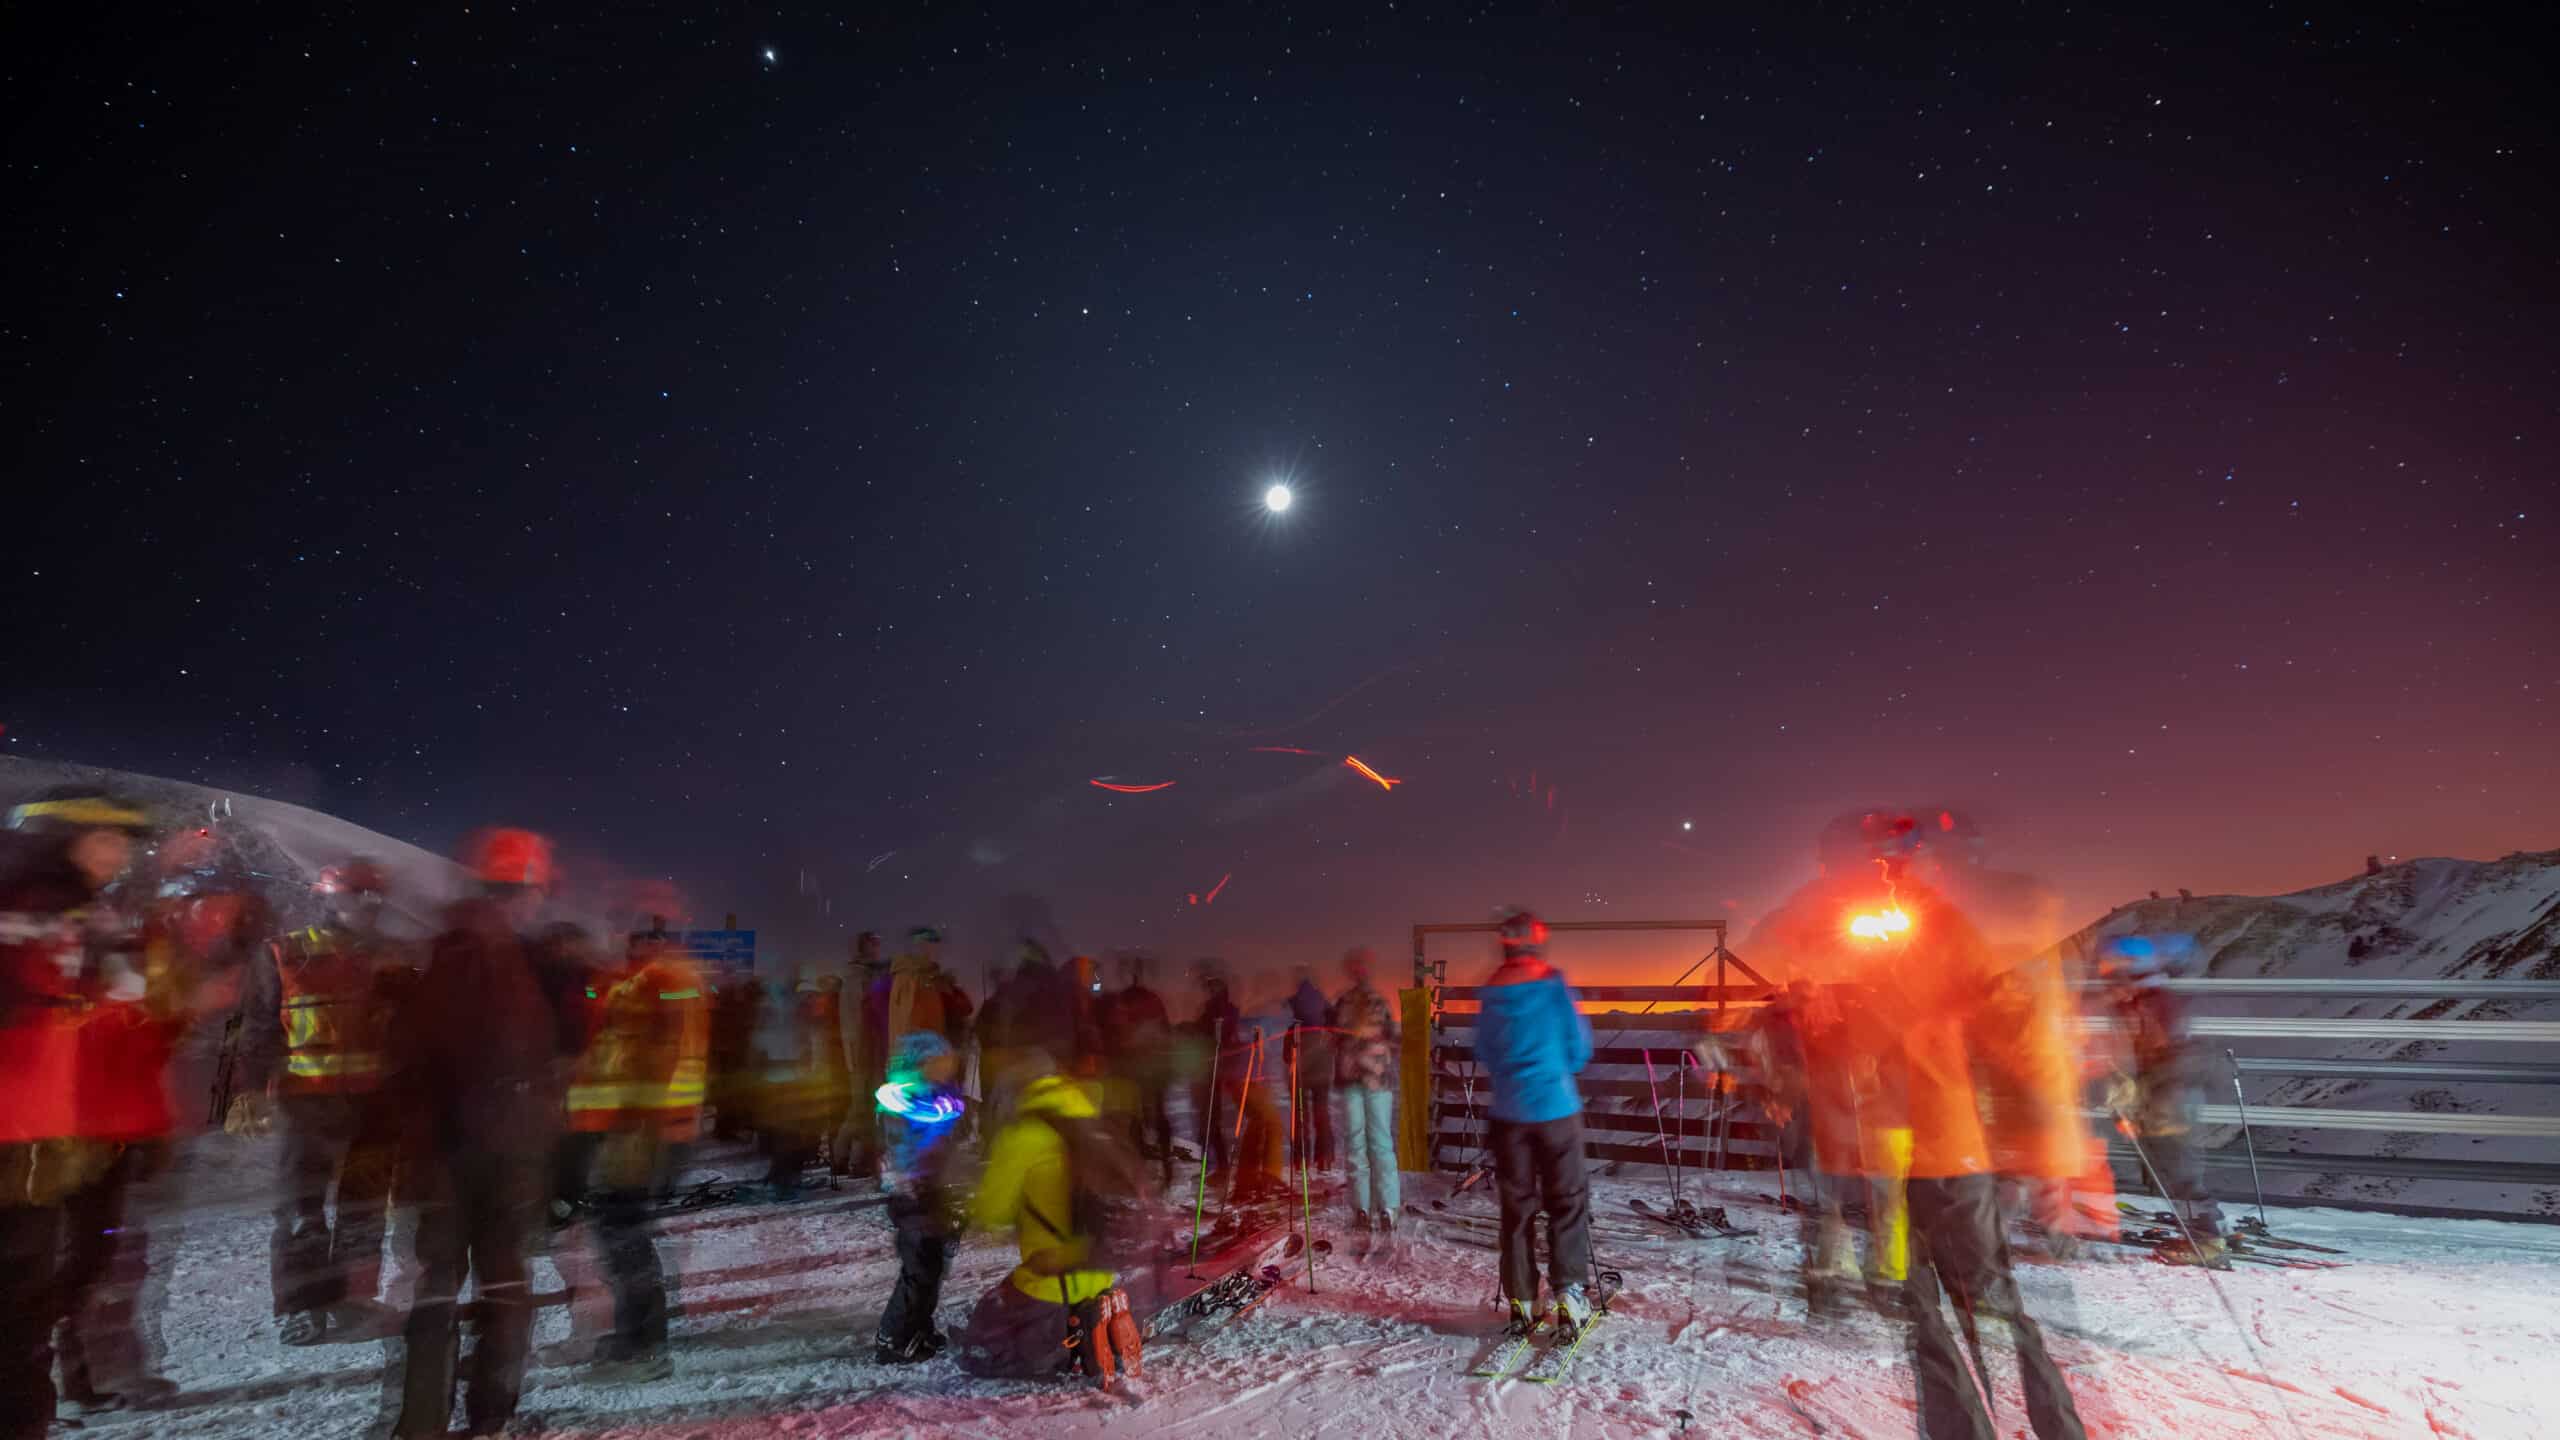 Pre-dawn Matariki Celebration on Coronet Peak. Photography by Nicholas Doran